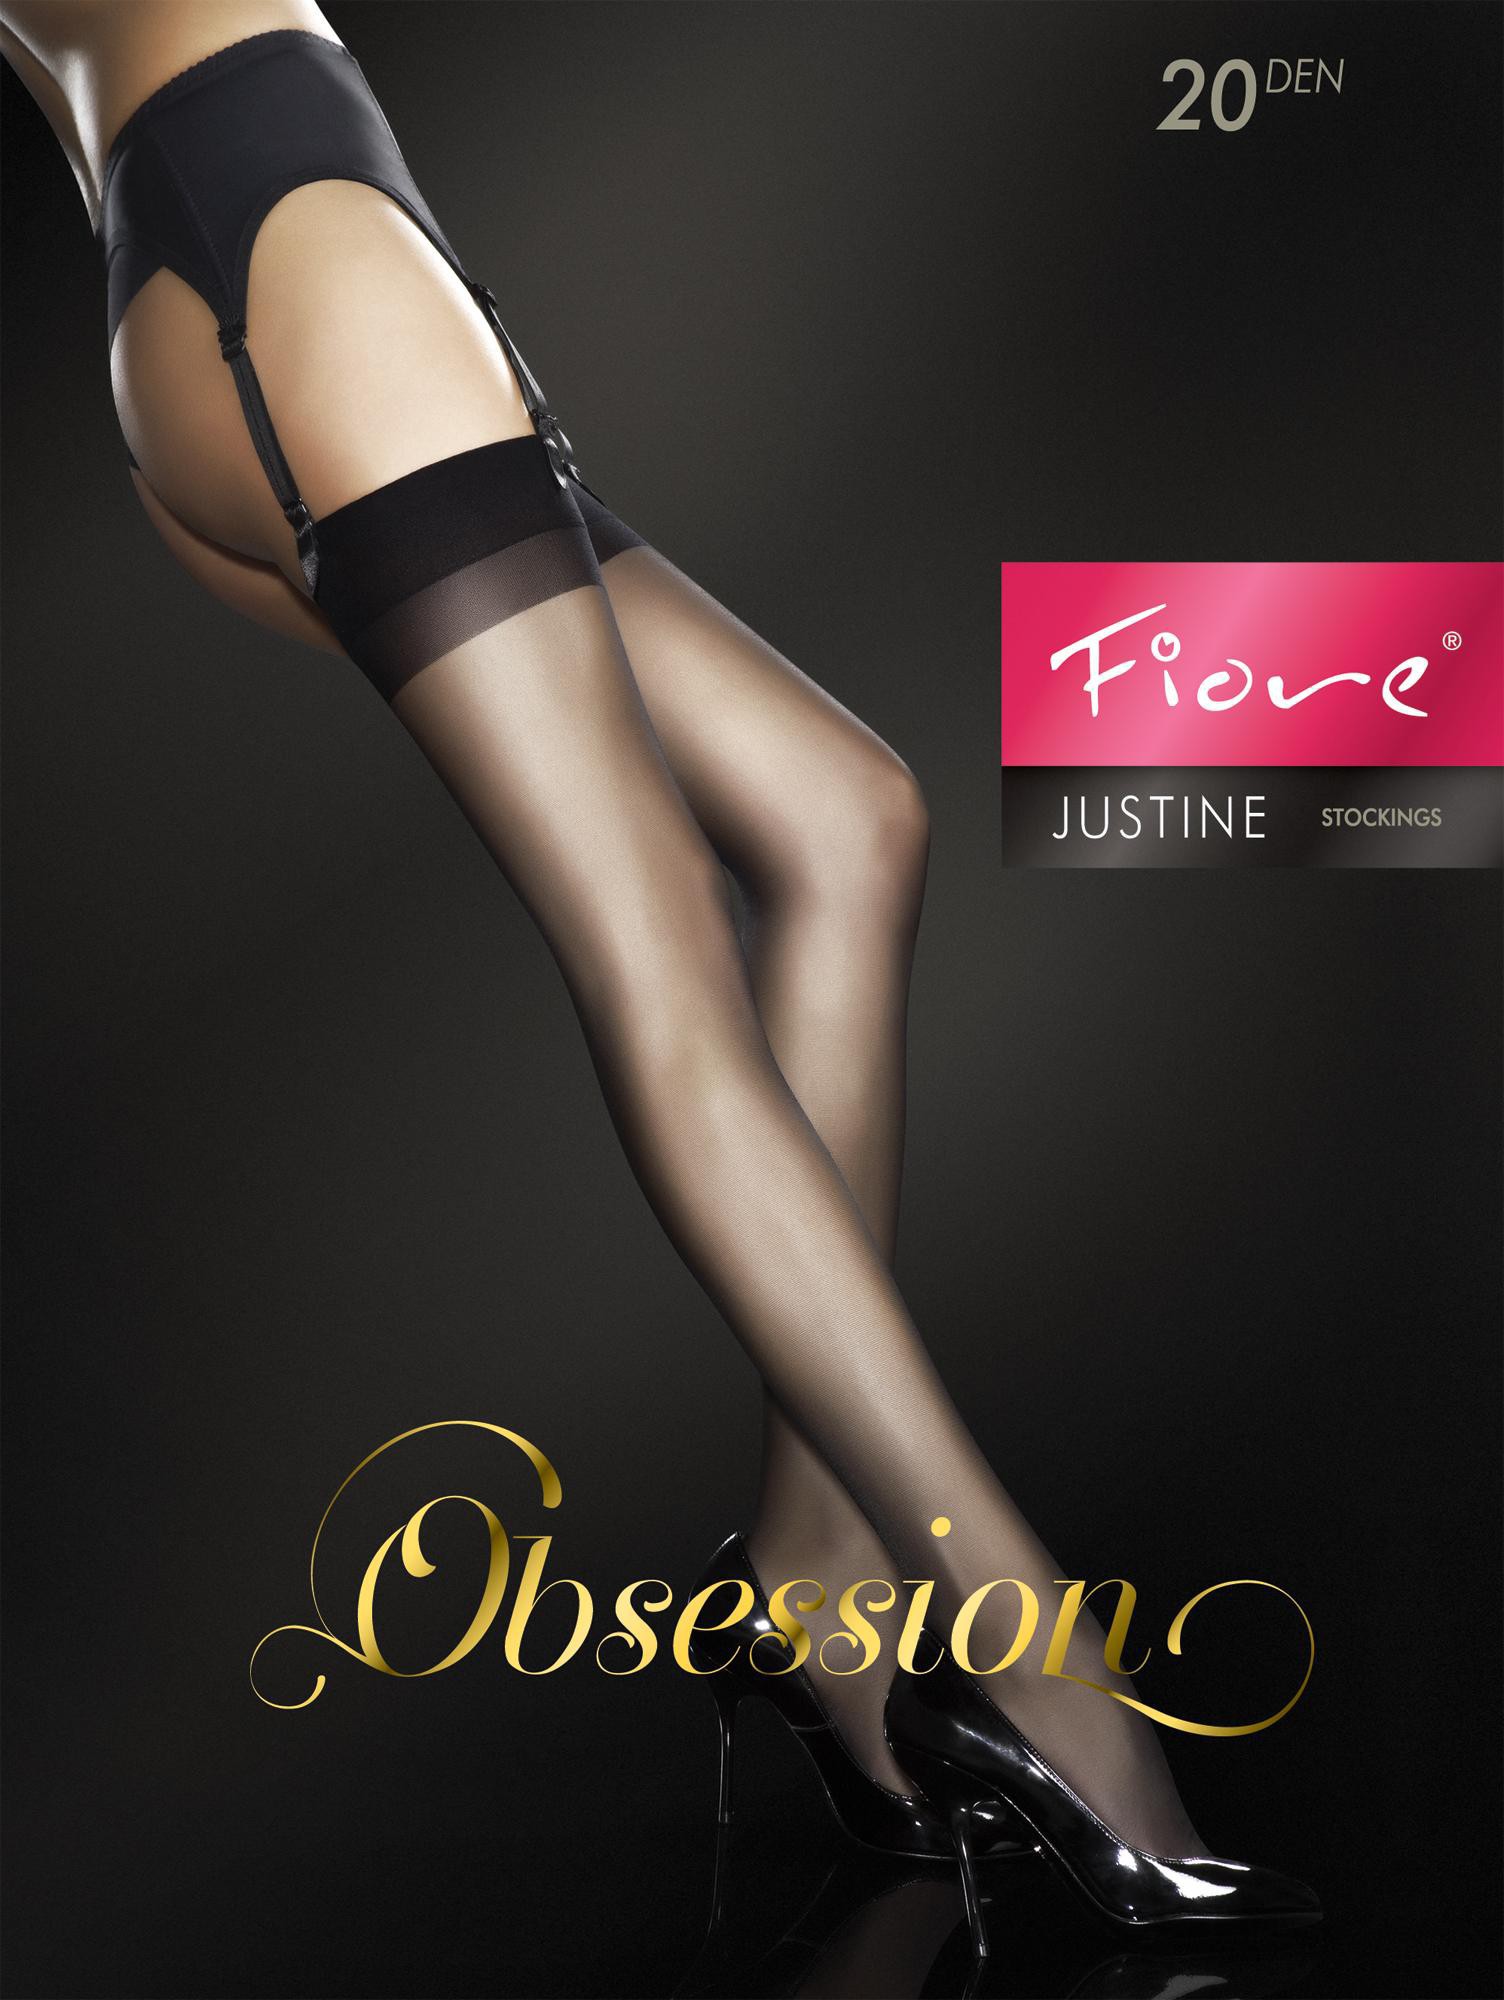 Fiore Obsession Sheer "JUSTINE" Stockings 20 Denier Suspender Stockings